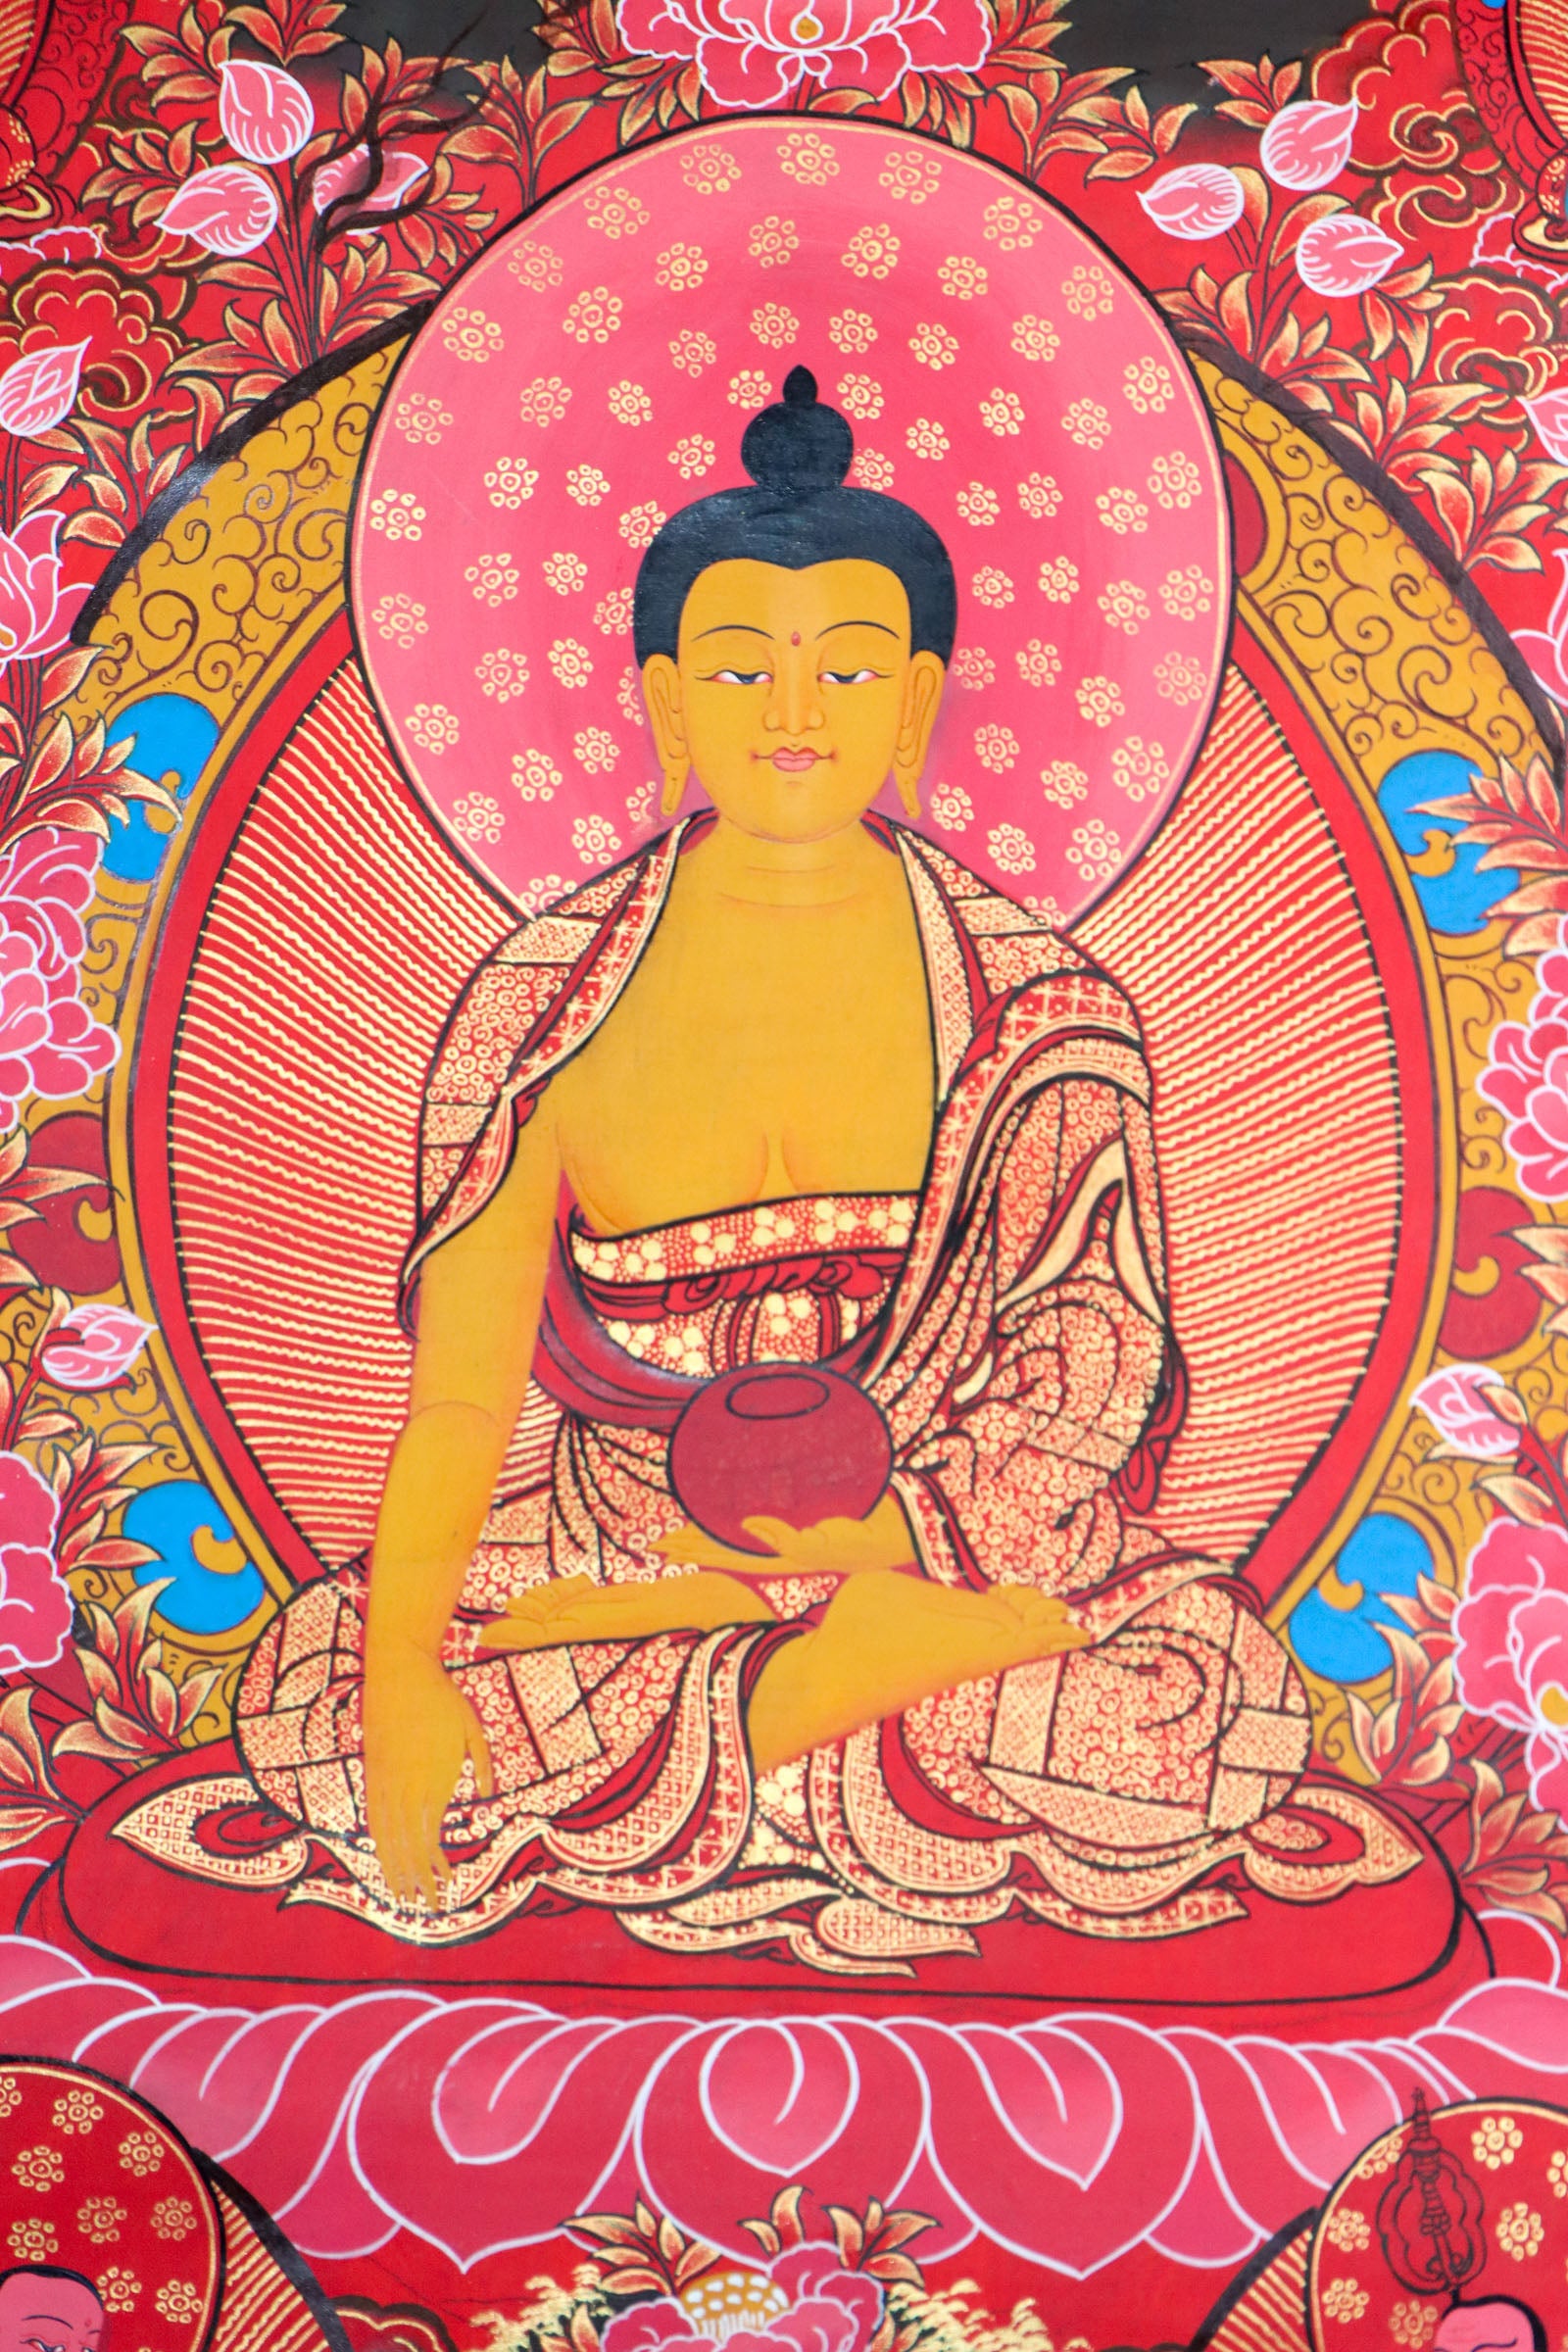 Shakyamuni Buddha Thangka for meditation aid, and teaching tool.